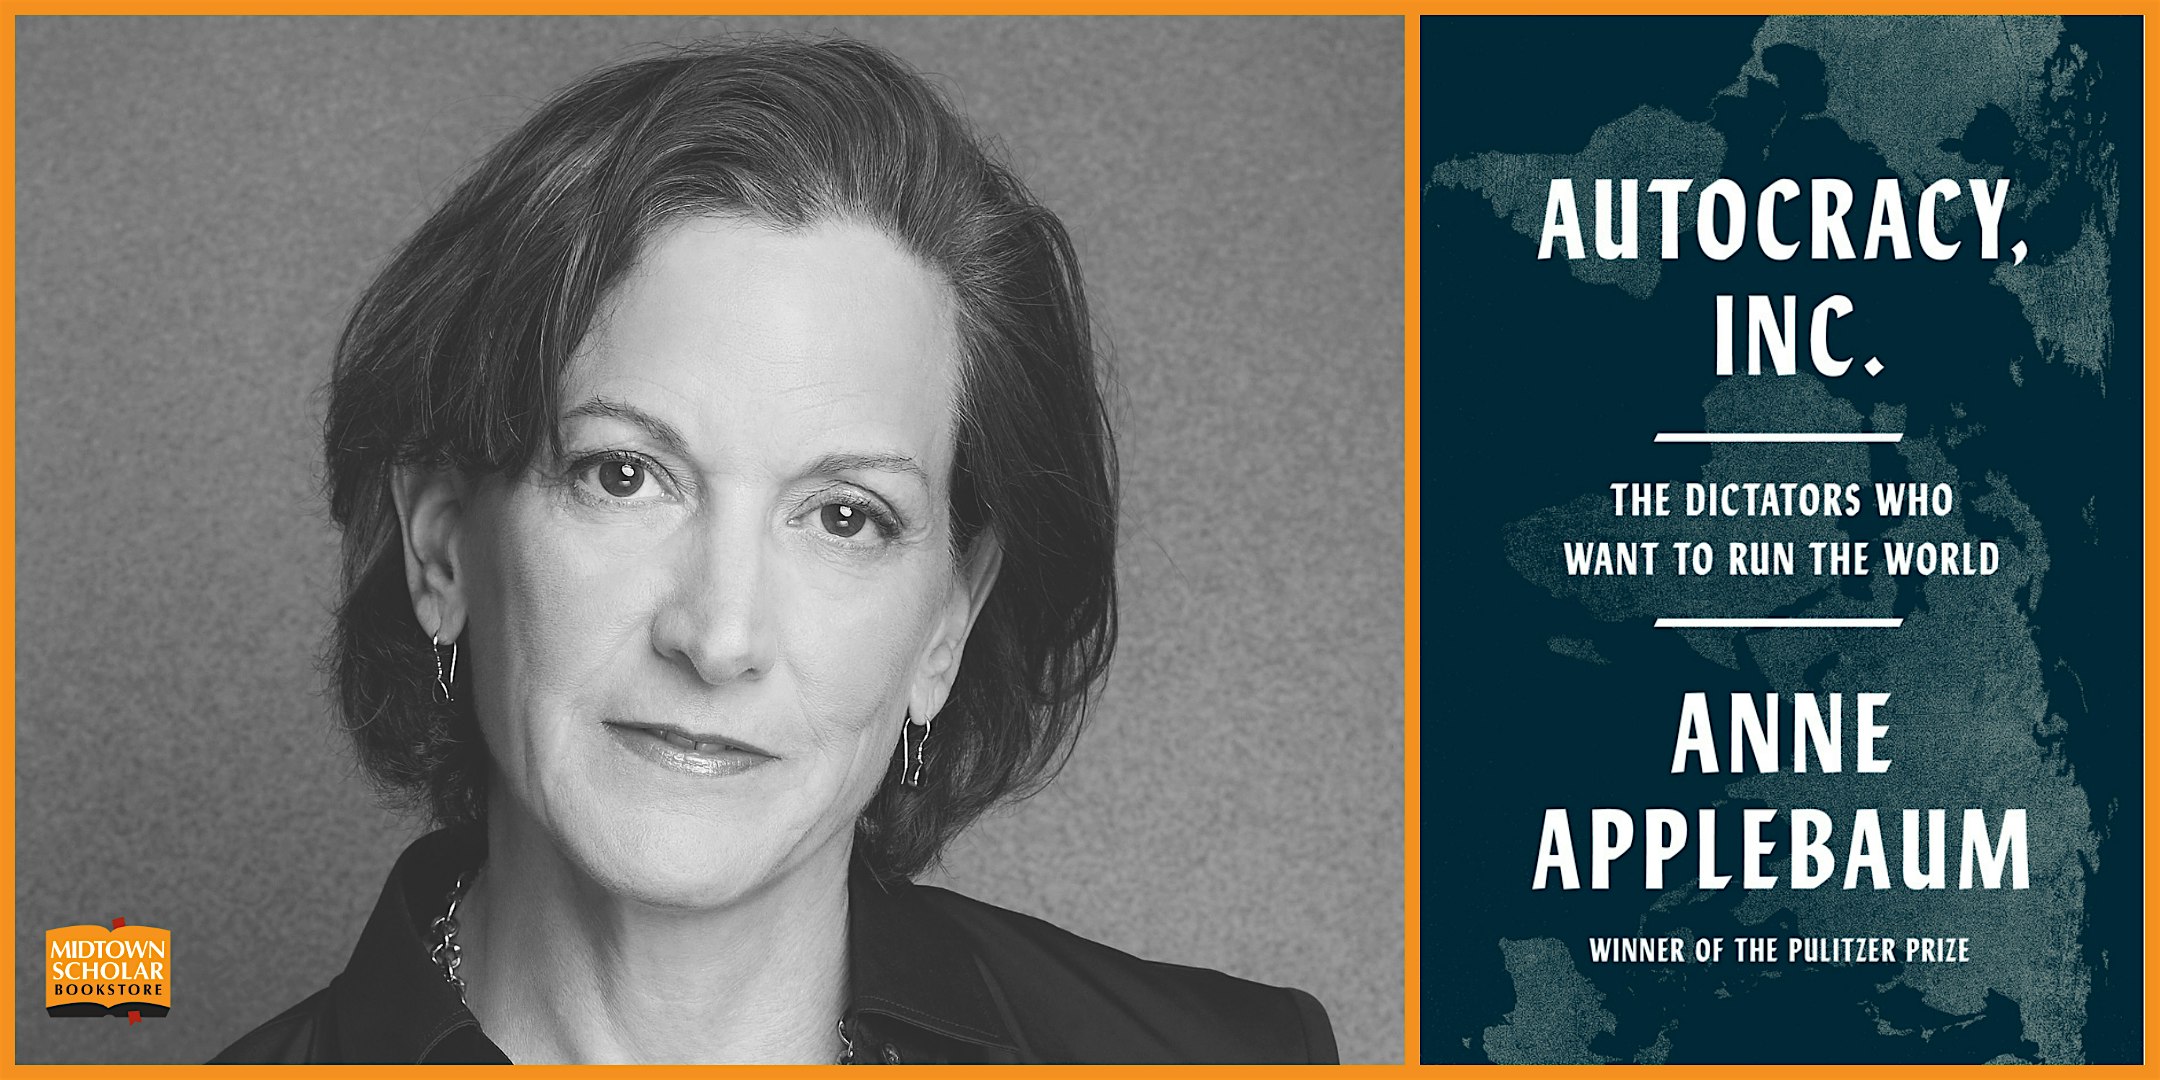 An Evening with Anne Applebaum: Autocracy, Inc.